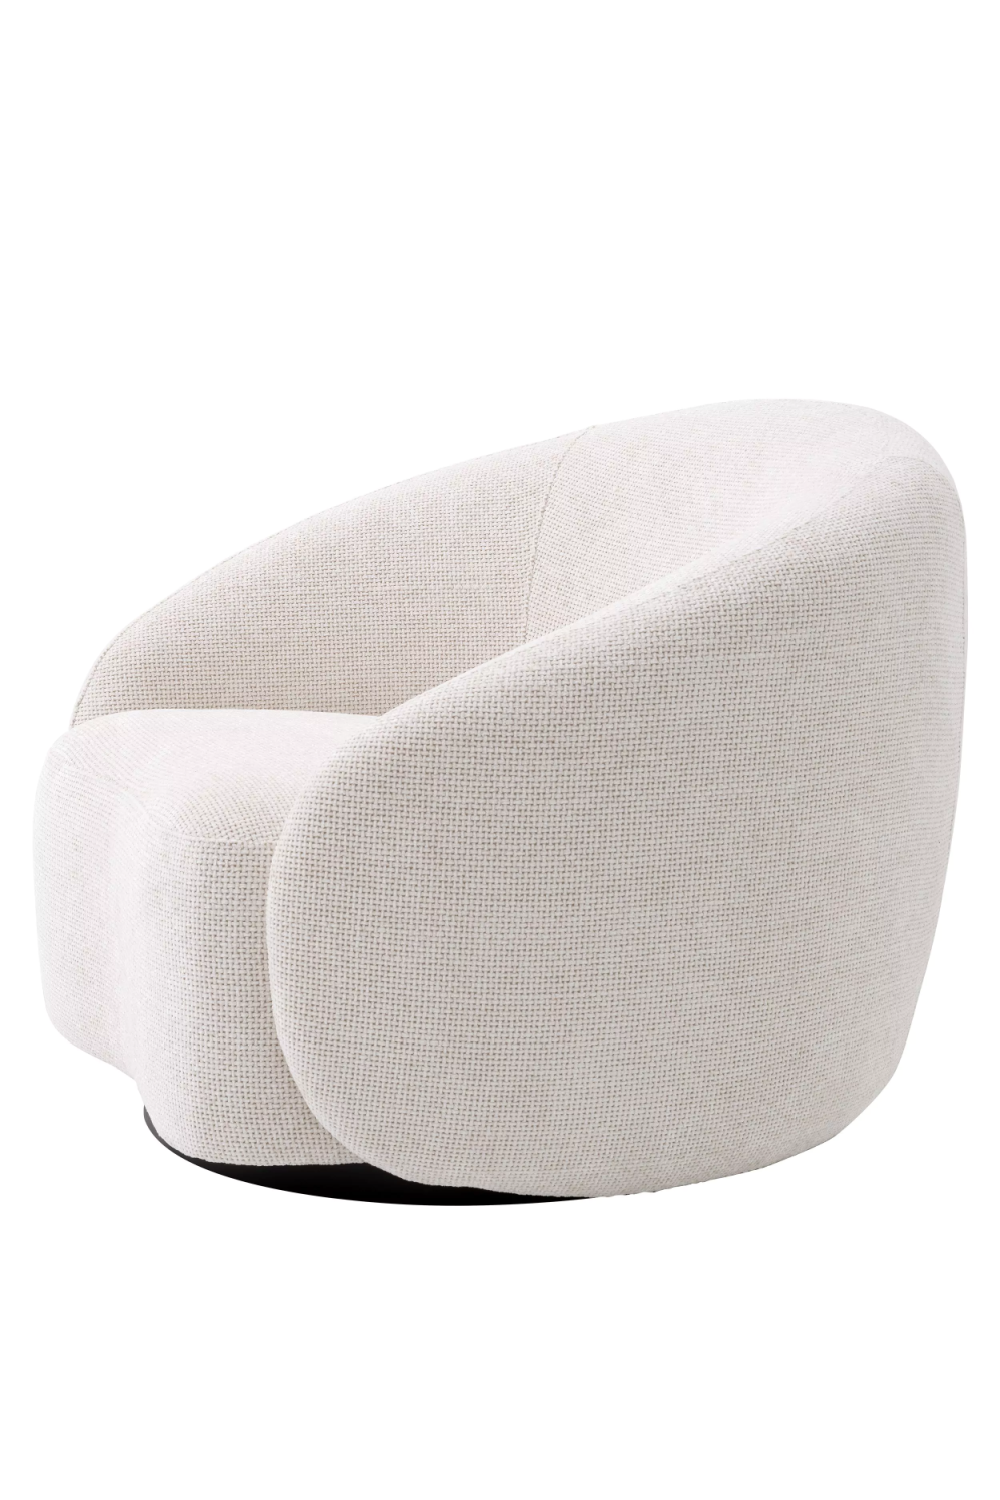 Off-White Swivel Tub Chair | Eichholtz Amore | Oroa.com